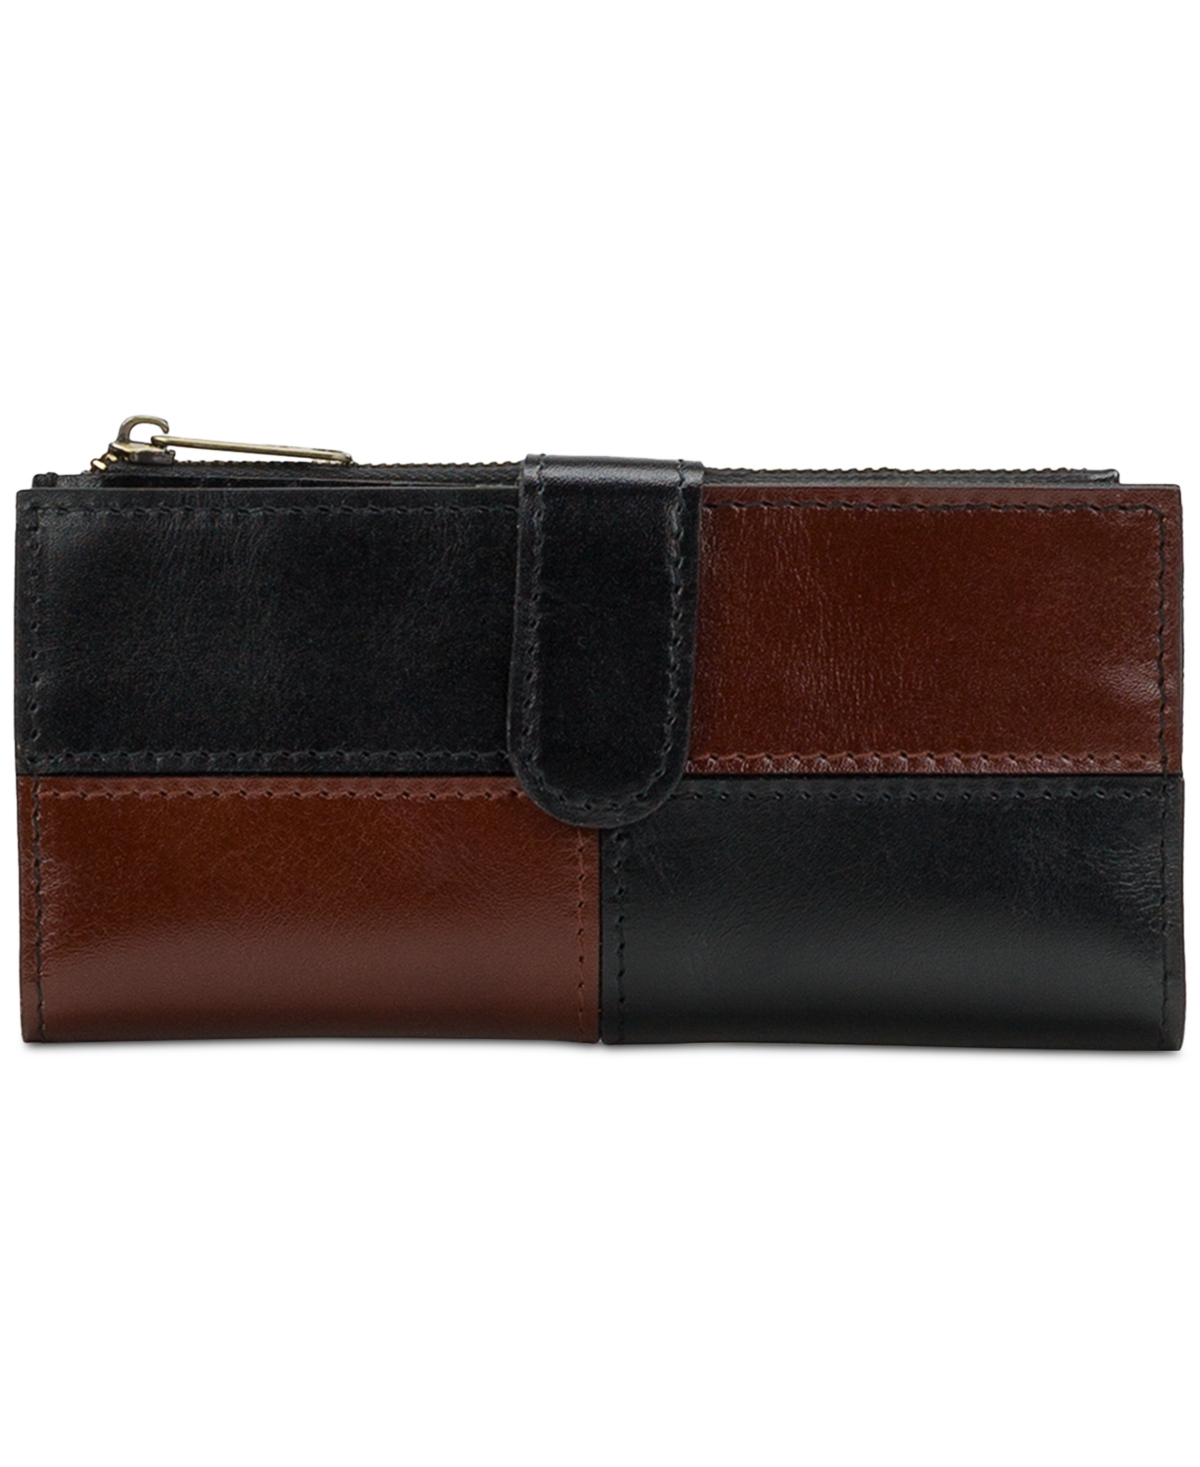 Nazari Leather Wallet - Hazelnut